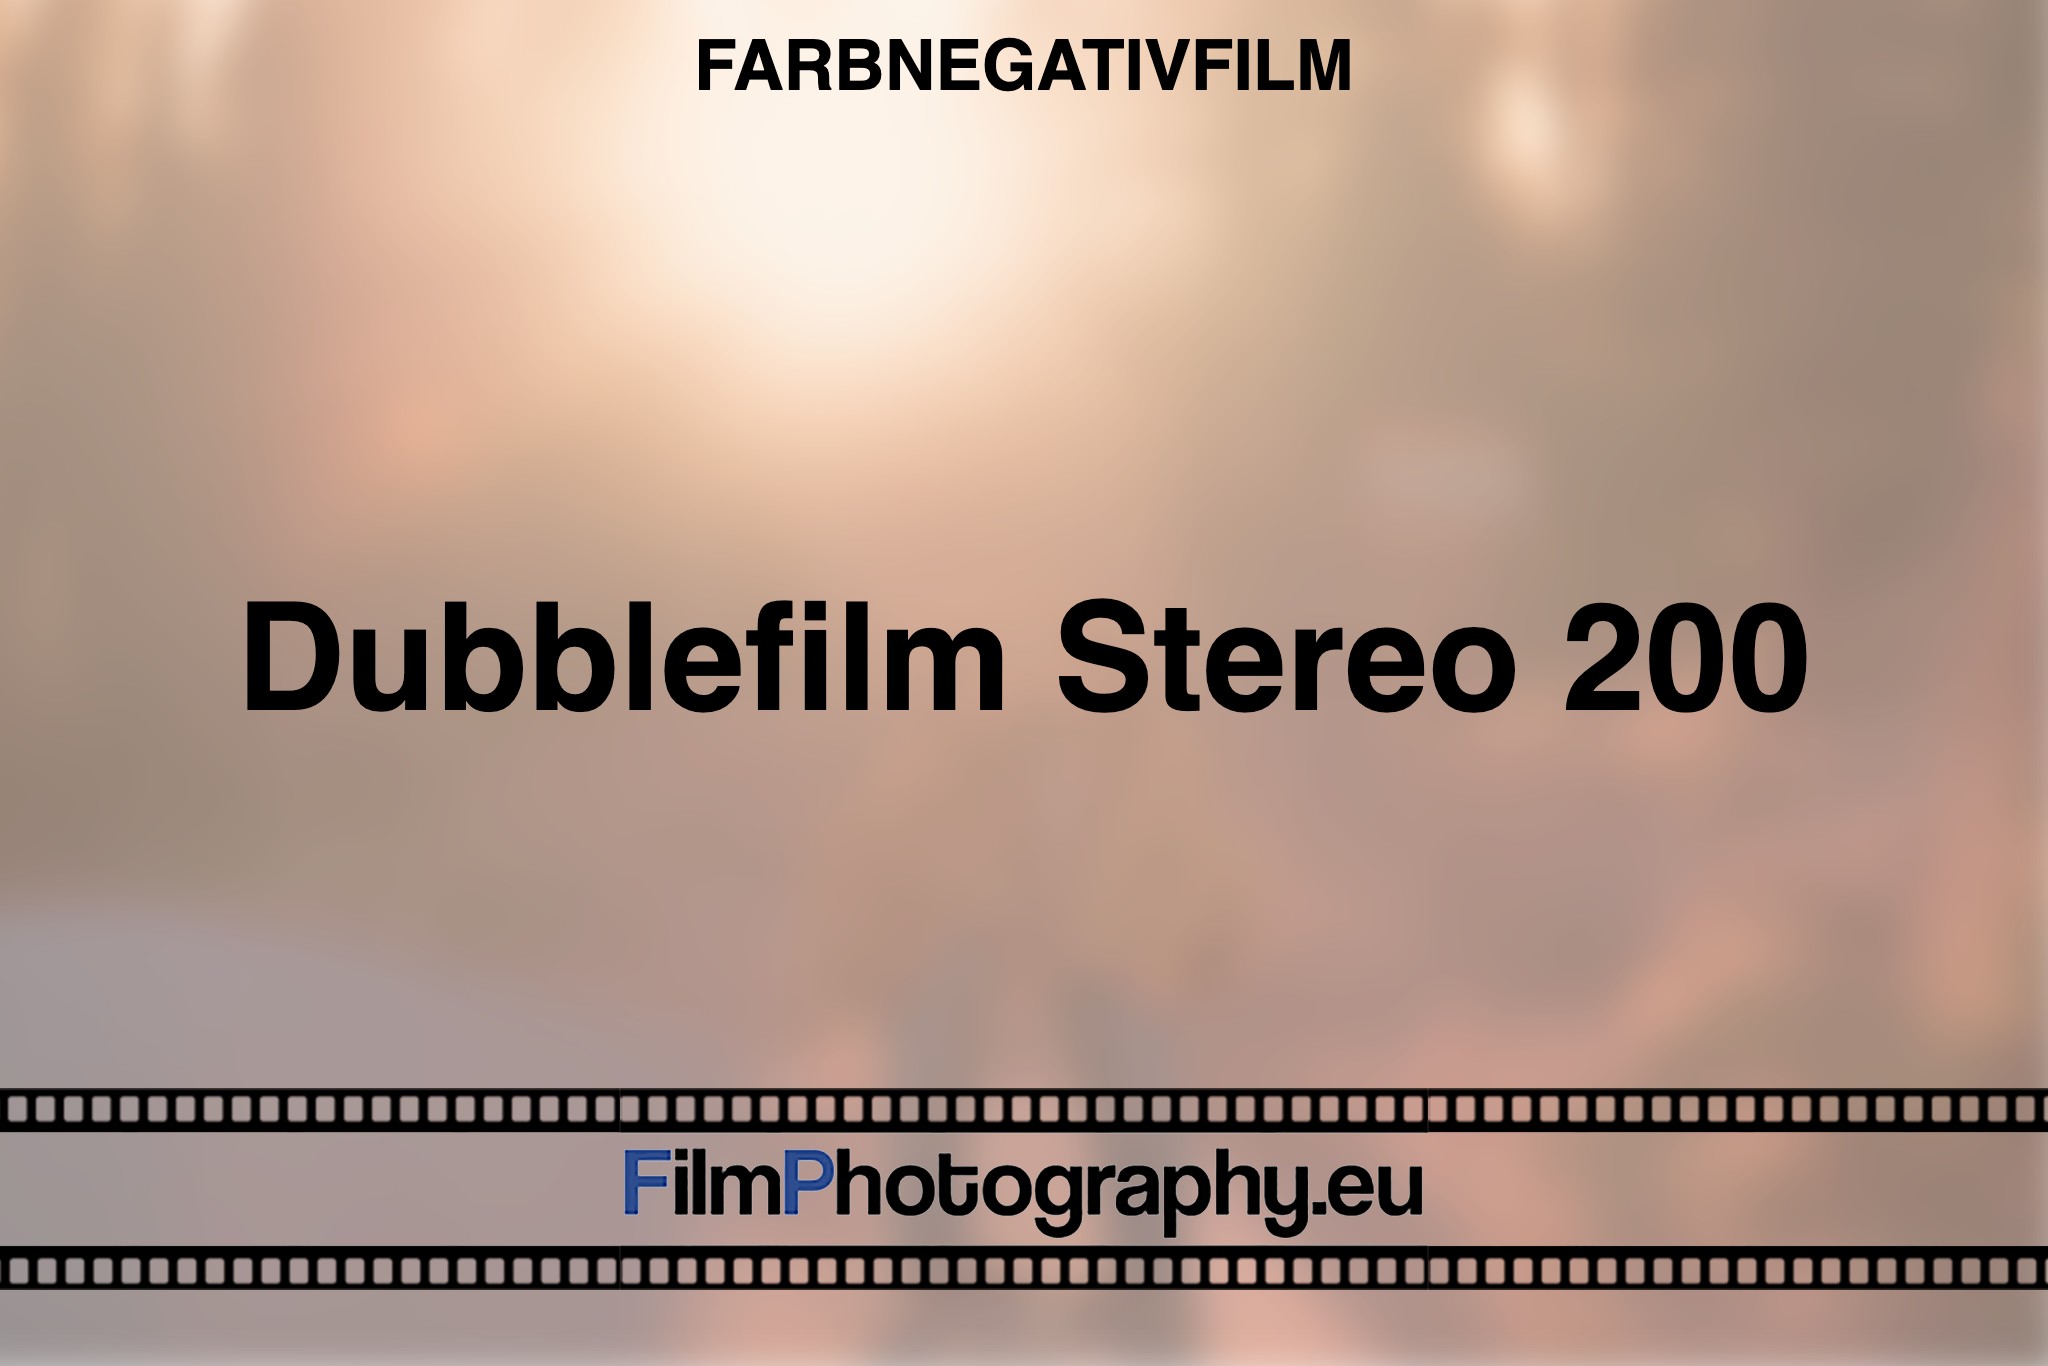 dubblefilm-stereo-200-farbnegativfilm-bnv